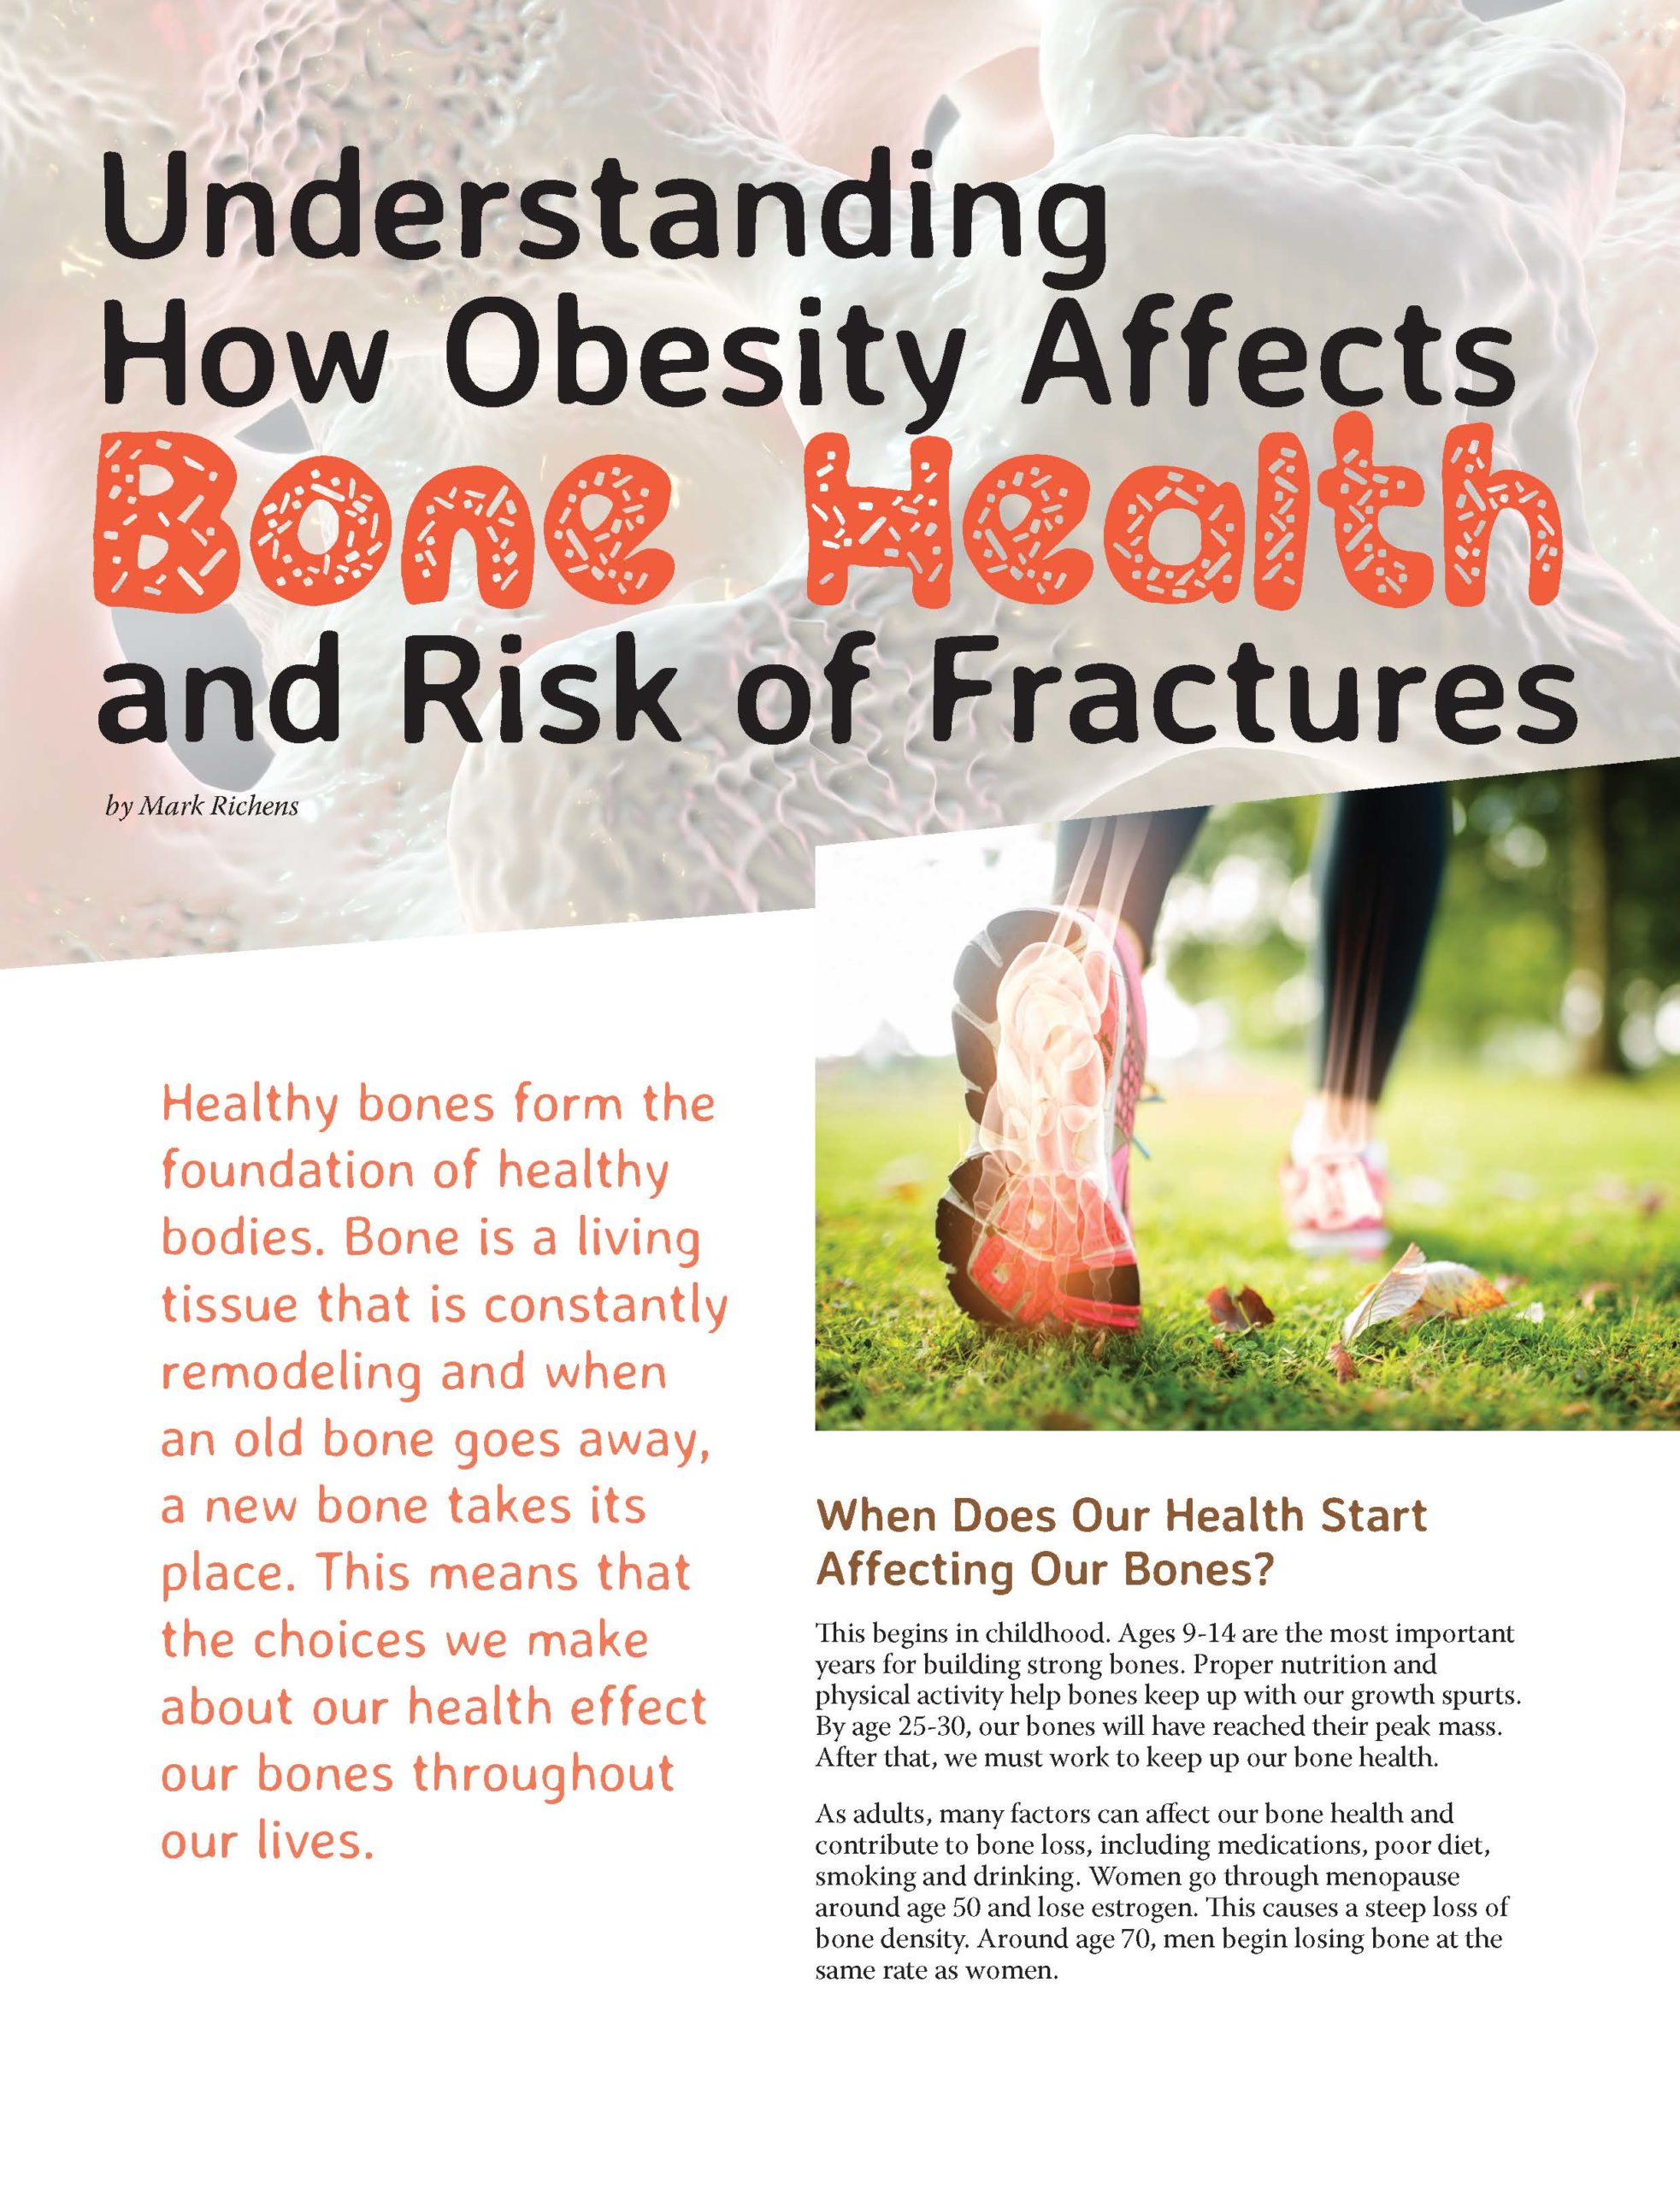 https://www.obesityaction.org/wp-content/uploads/Bone-Health-scaled.jpg